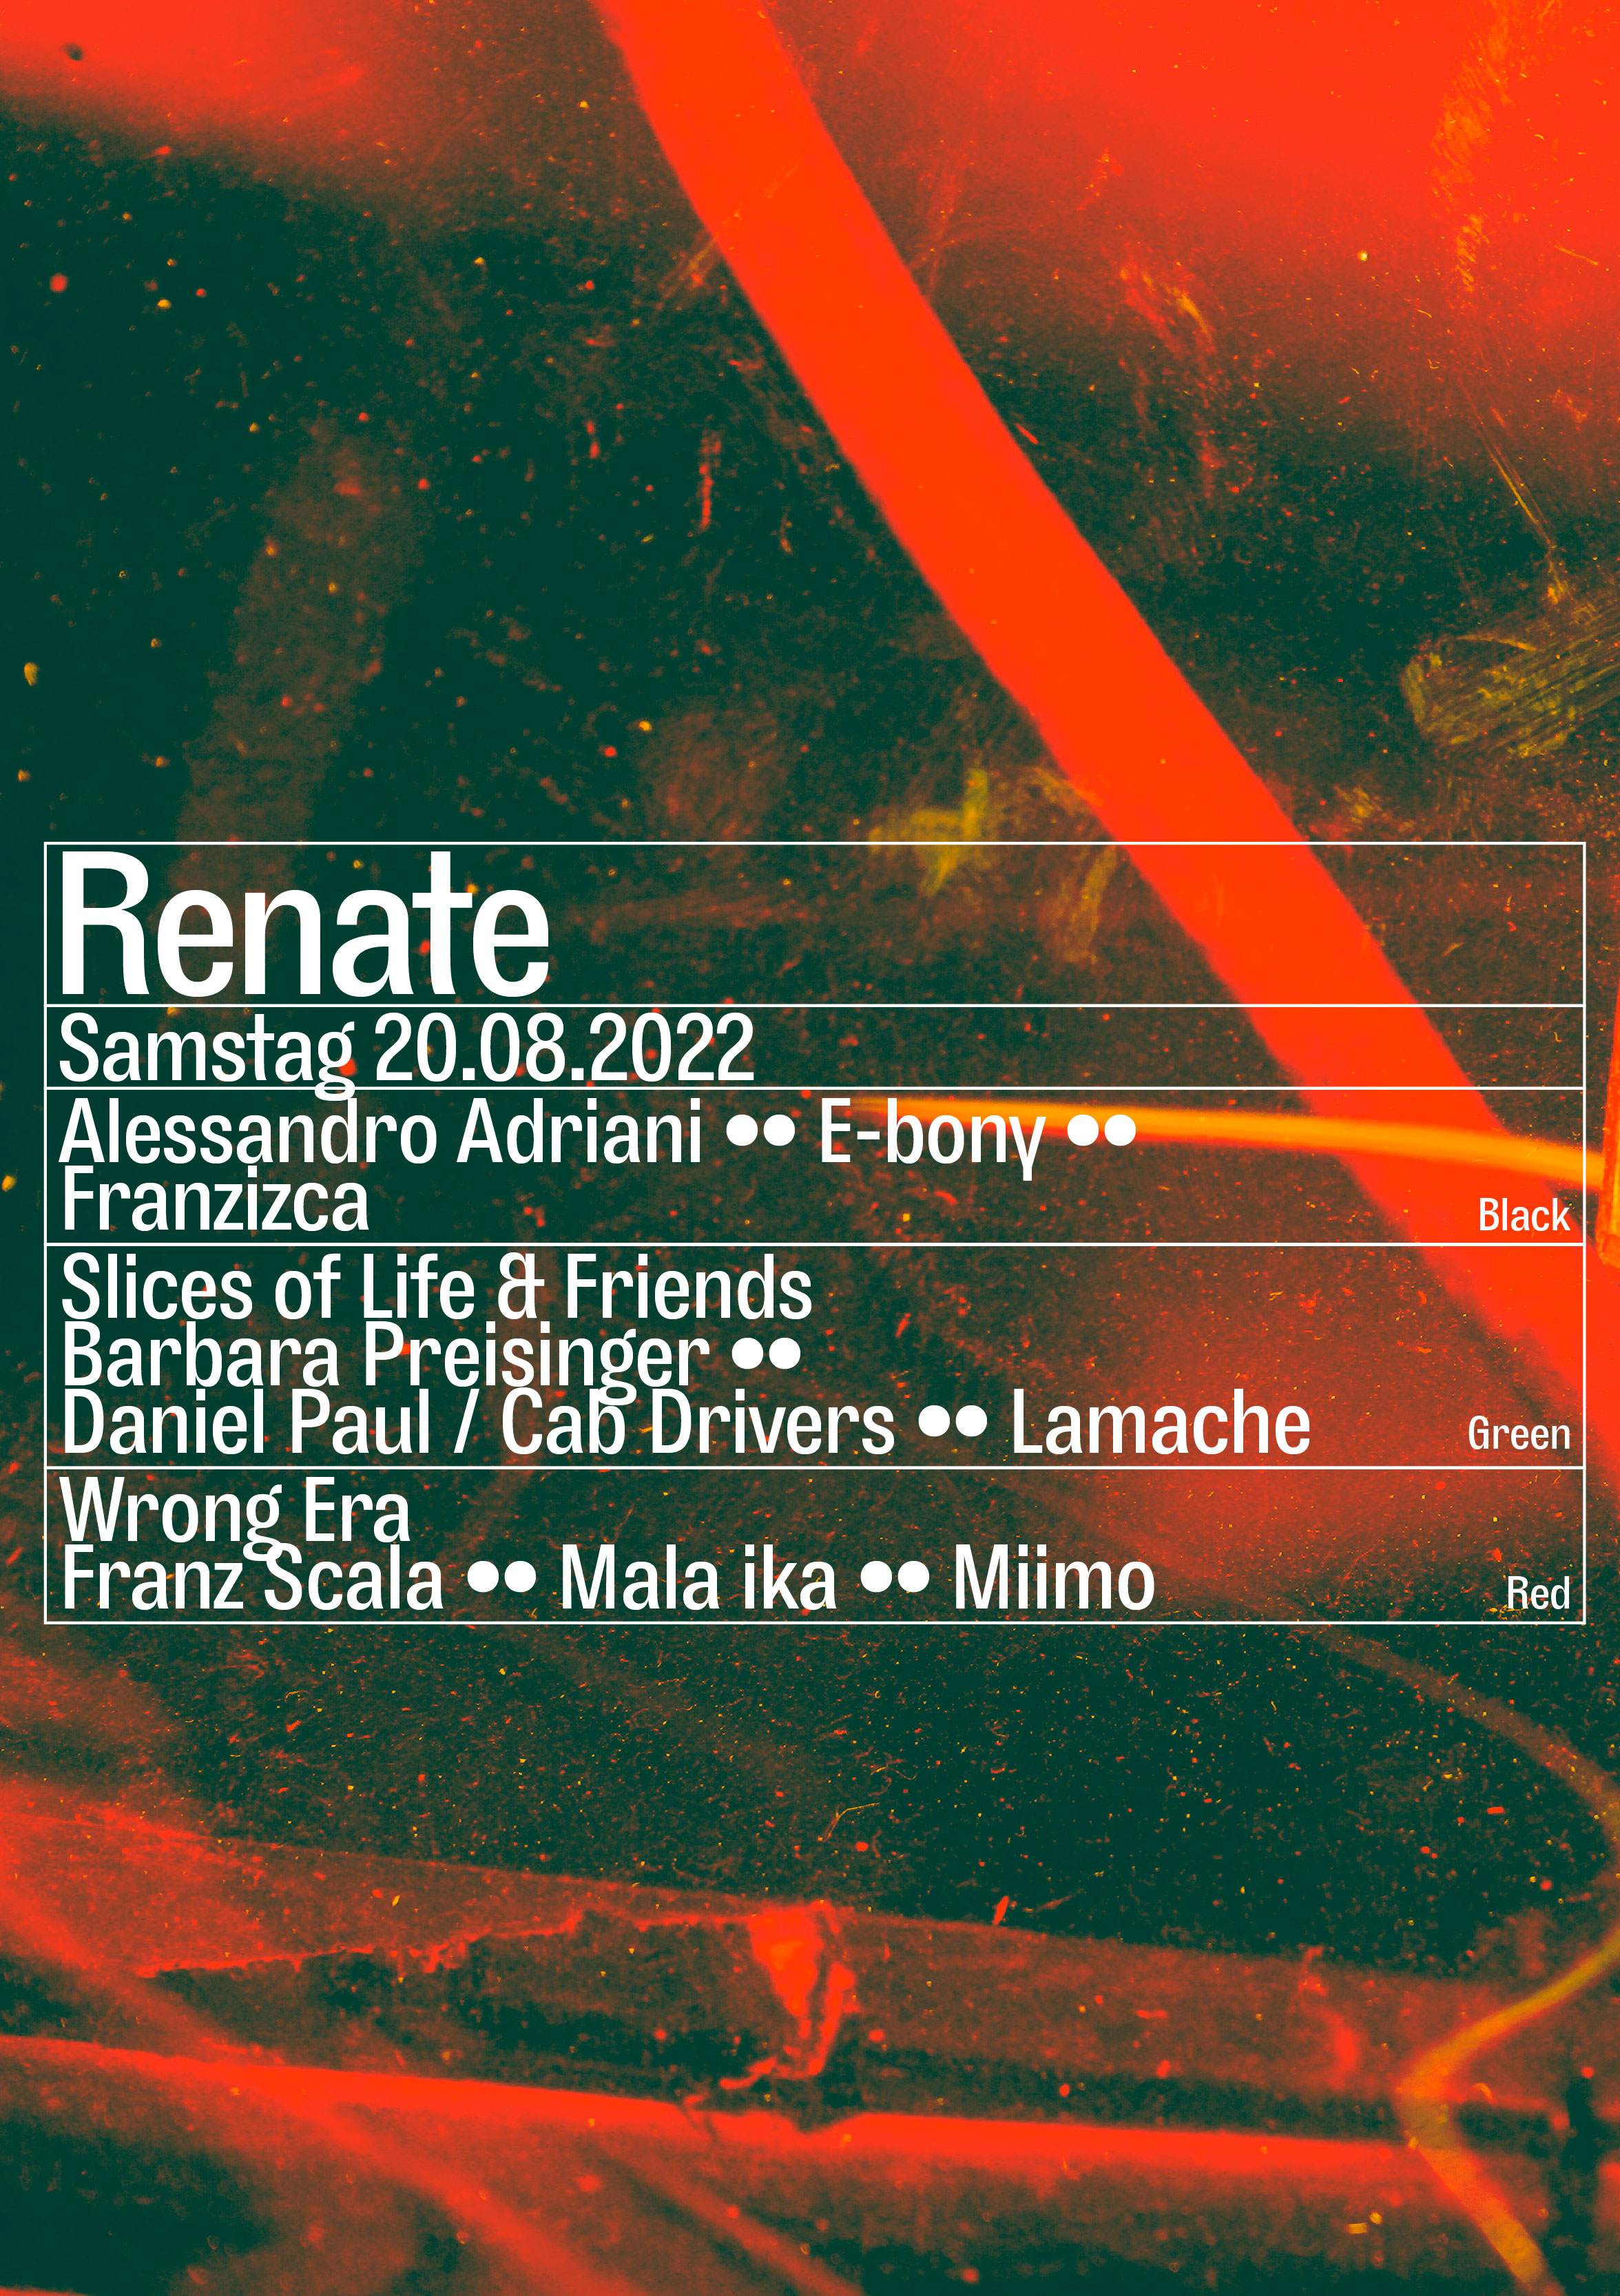 Renate with Alessandro Adriani, Barbara Preisinger, Lamache, Mala ika - フライヤー表